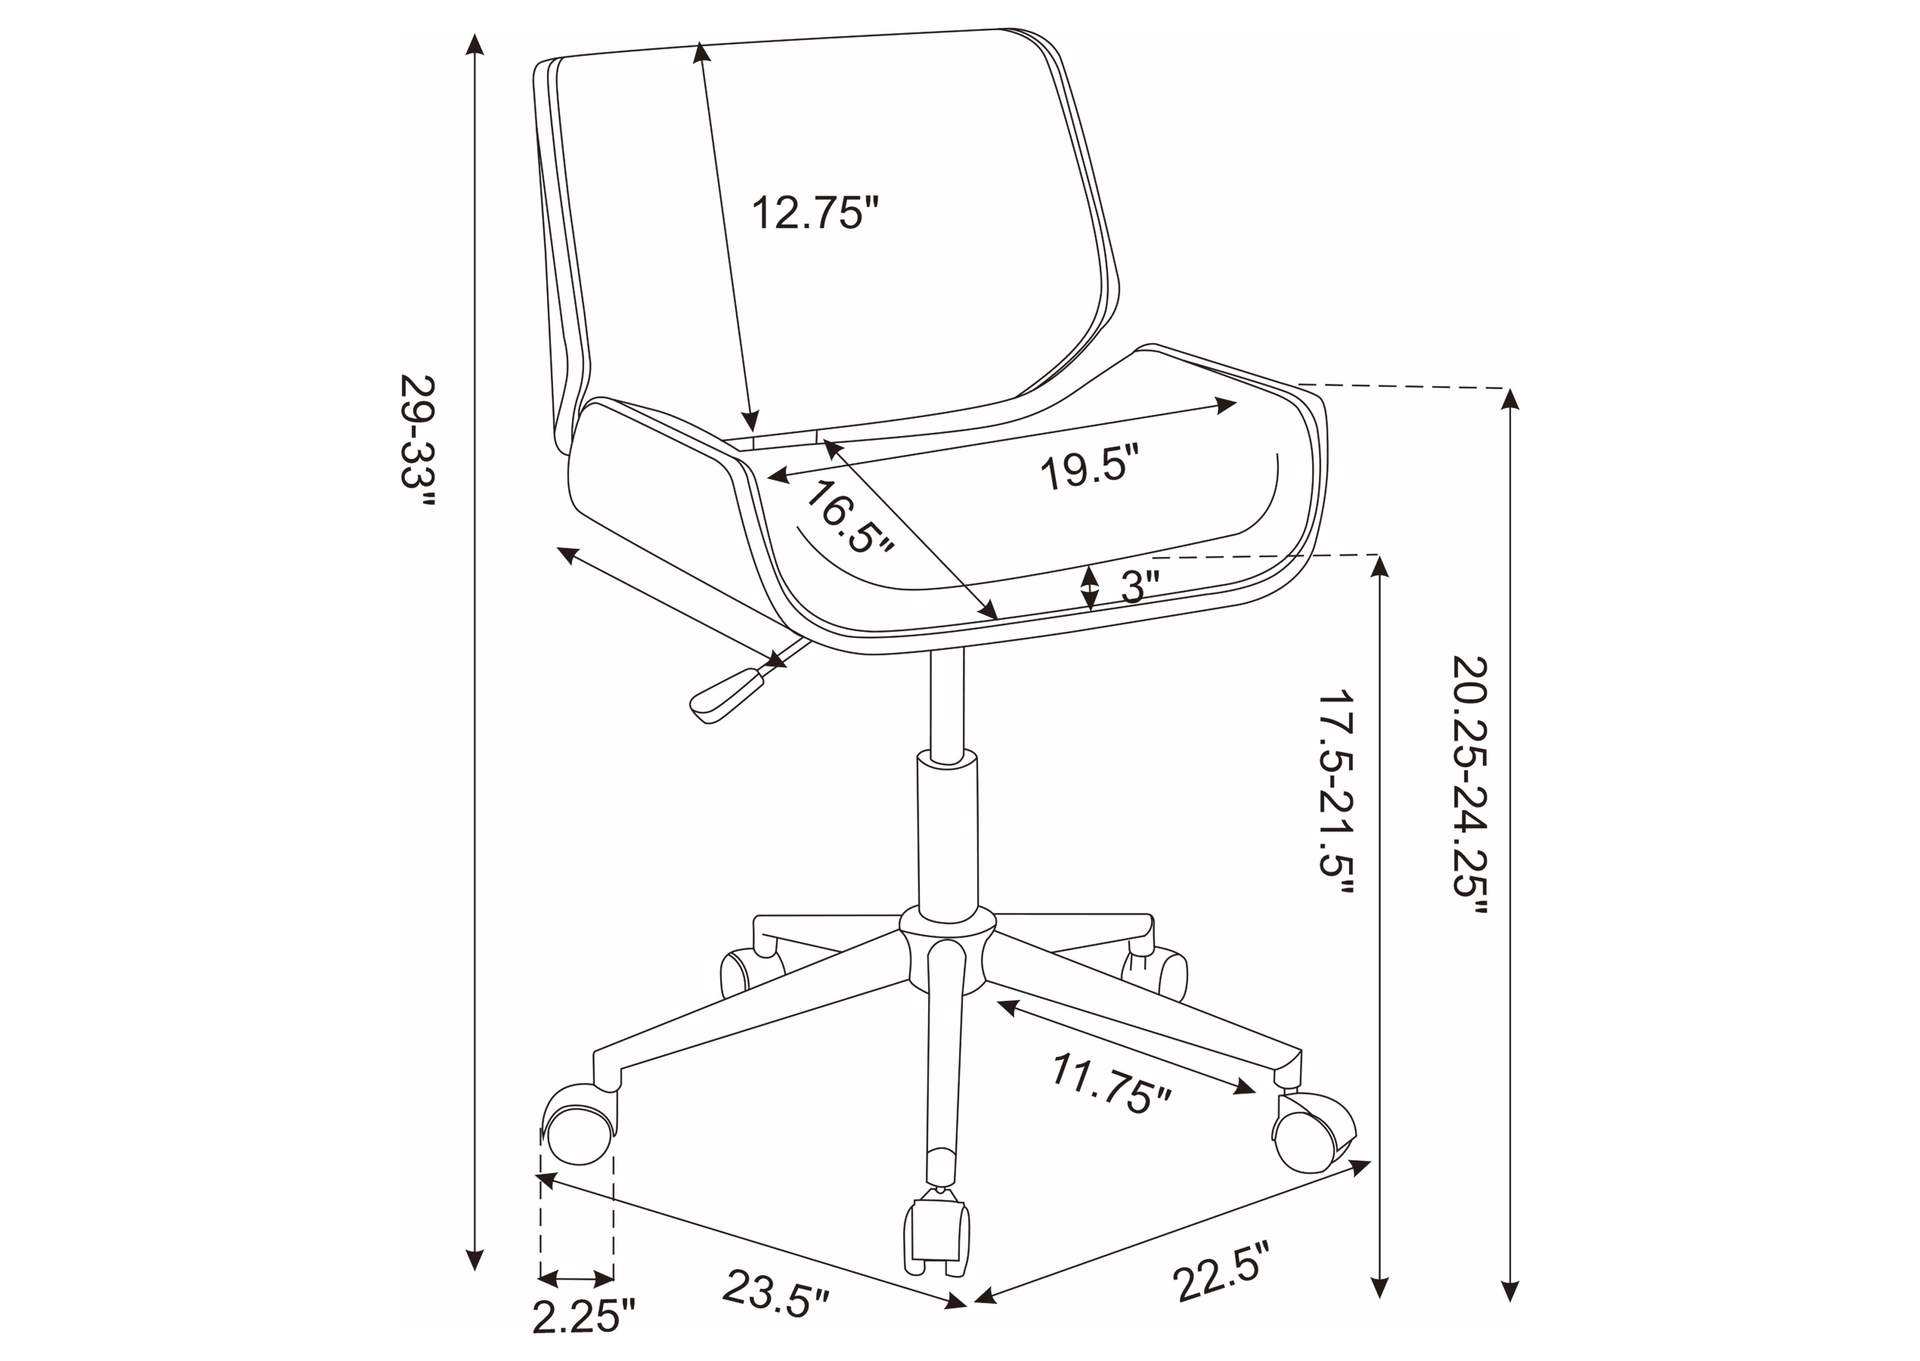 Addington Adjustable Height Office Chair Black and Chrome,Coaster Furniture